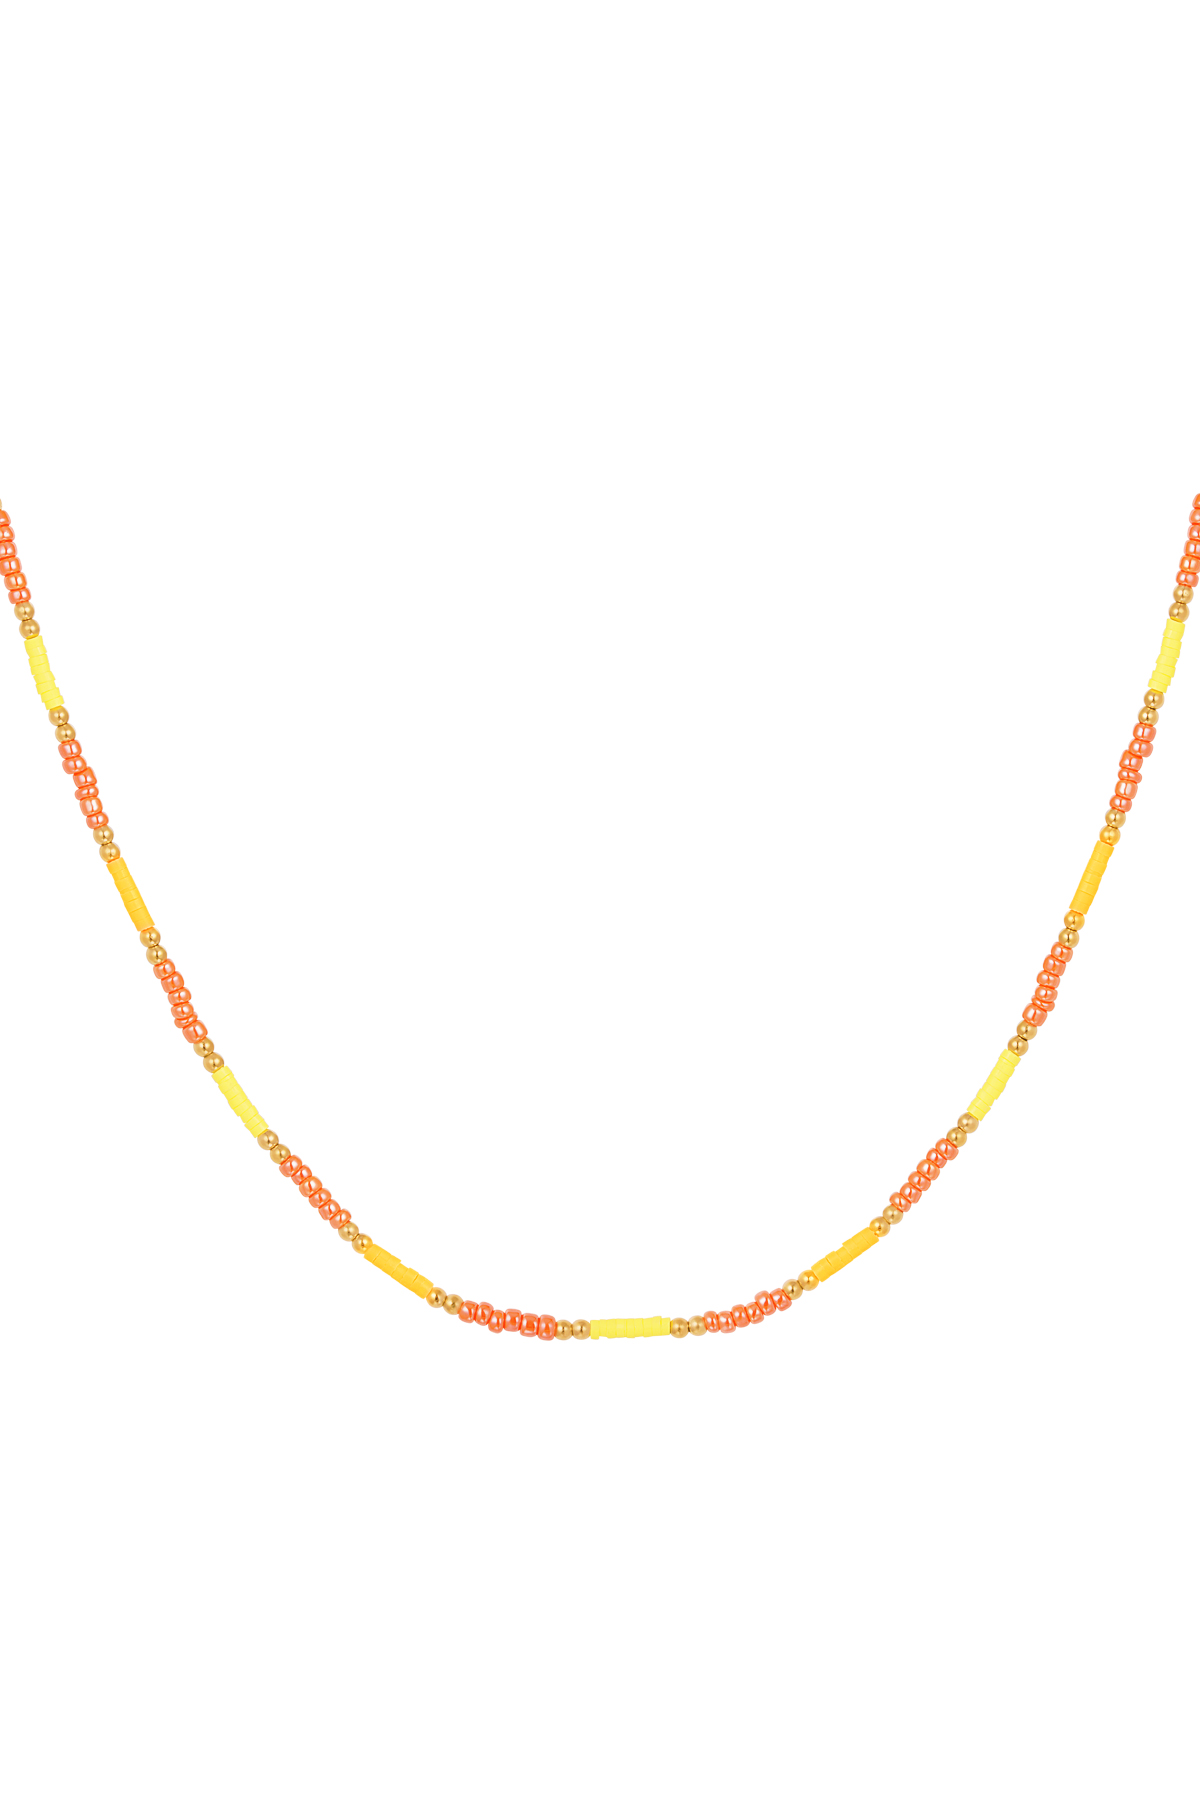 Küçük renkli boncuk kolye - sarı/turuncu h5 